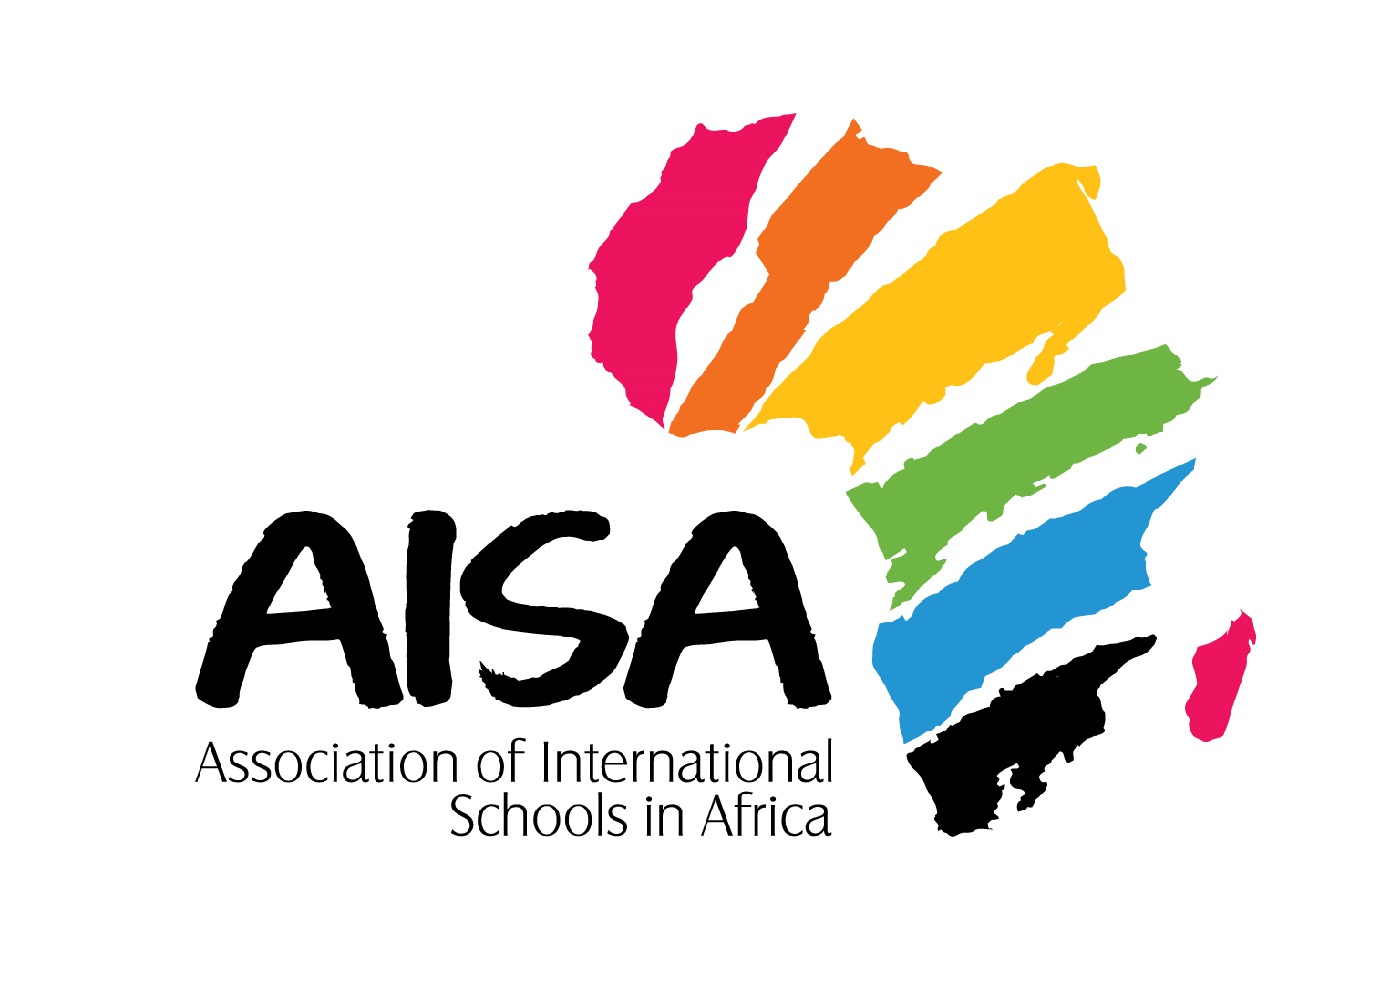 Association of International Schools in Africa (AISA) logo